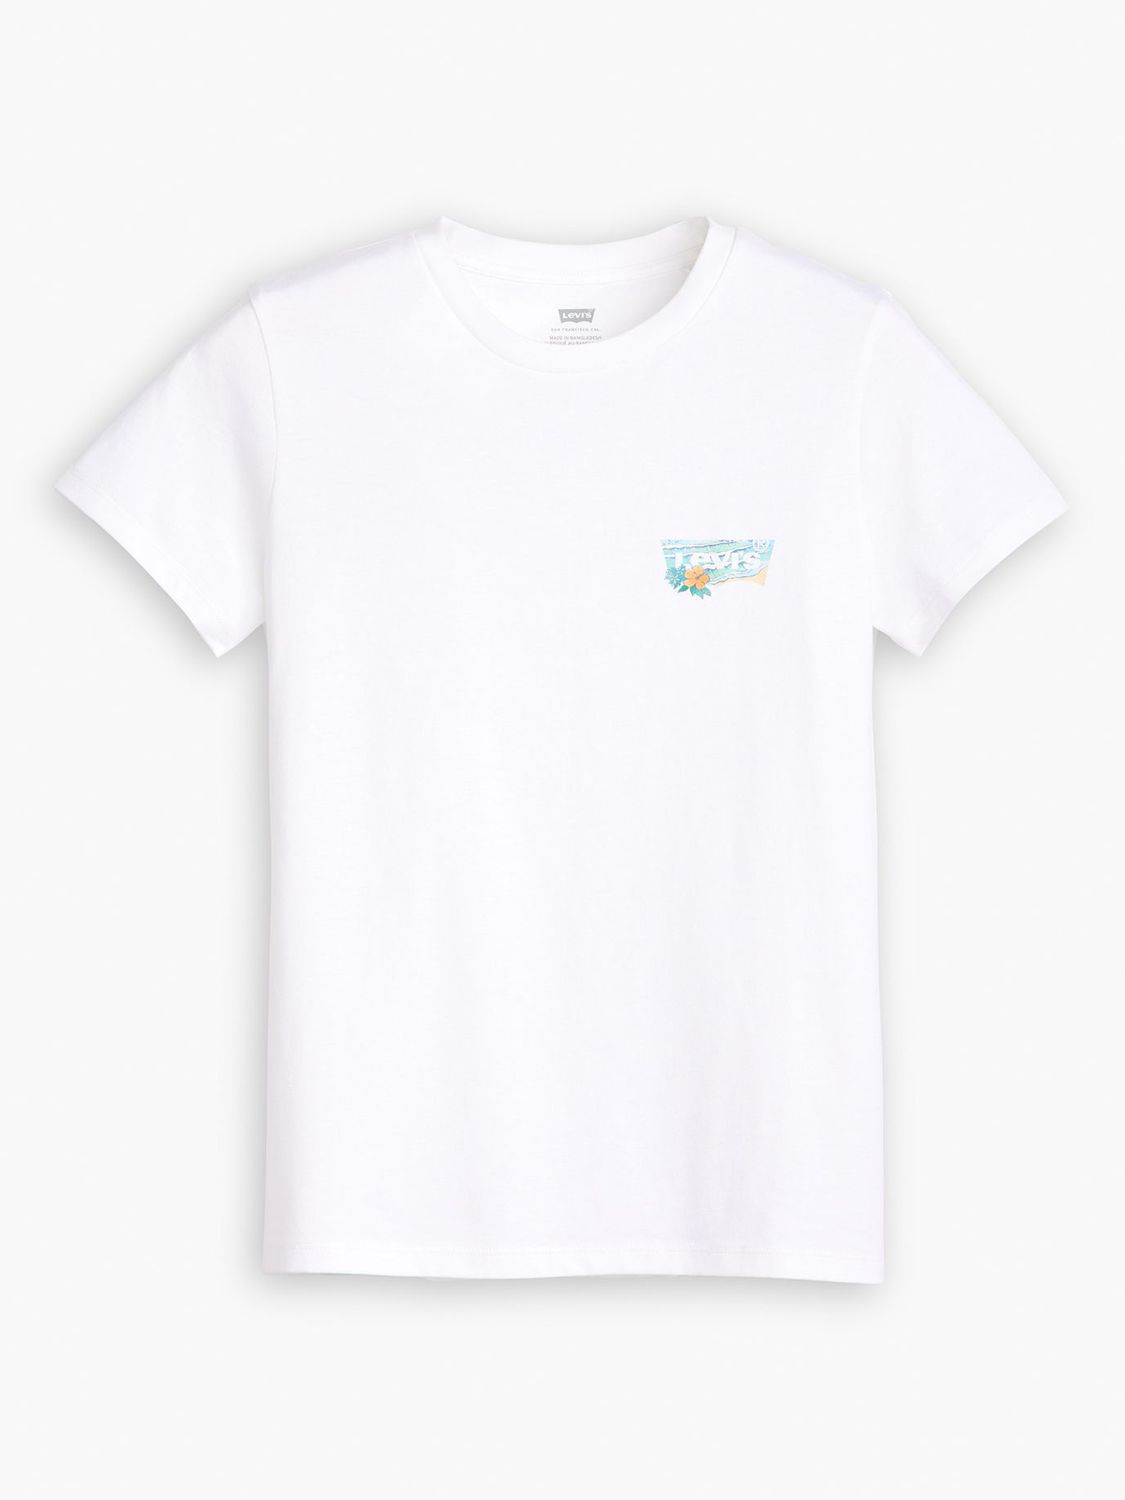 Levi's Perfect Wave Ashore Logo T-Shirt, White, XS